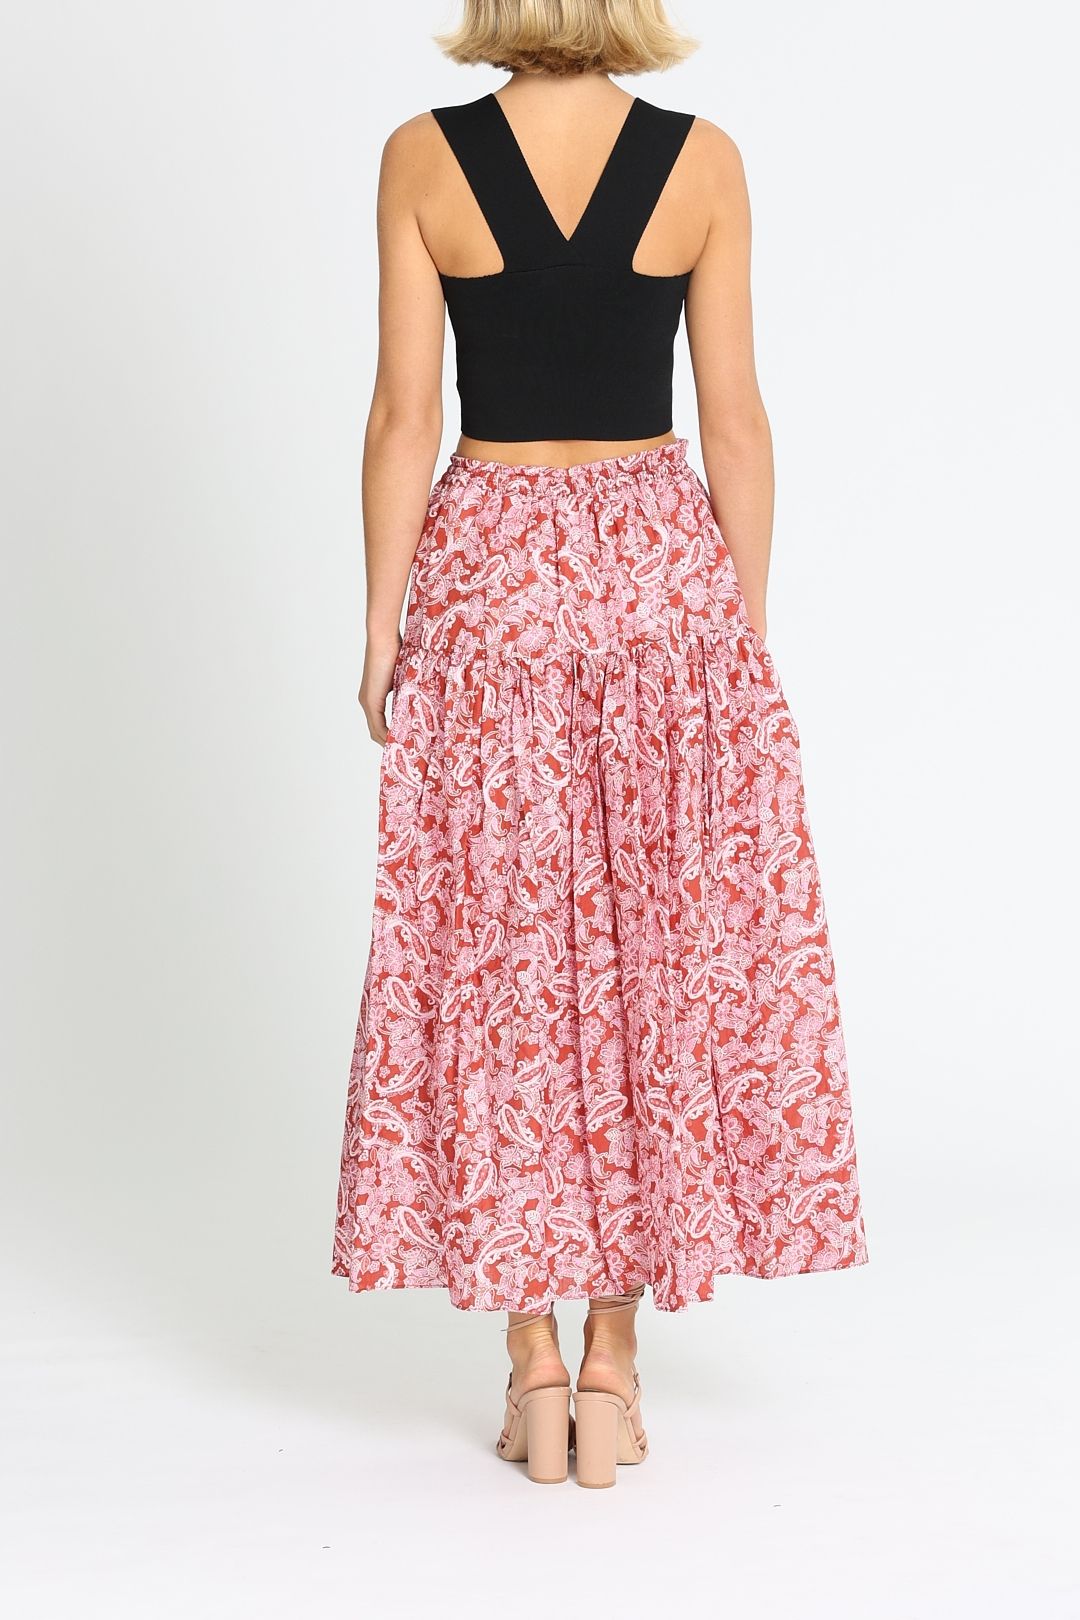 Steele Robin Skirt Chestnut Paisley Tiered Skirt